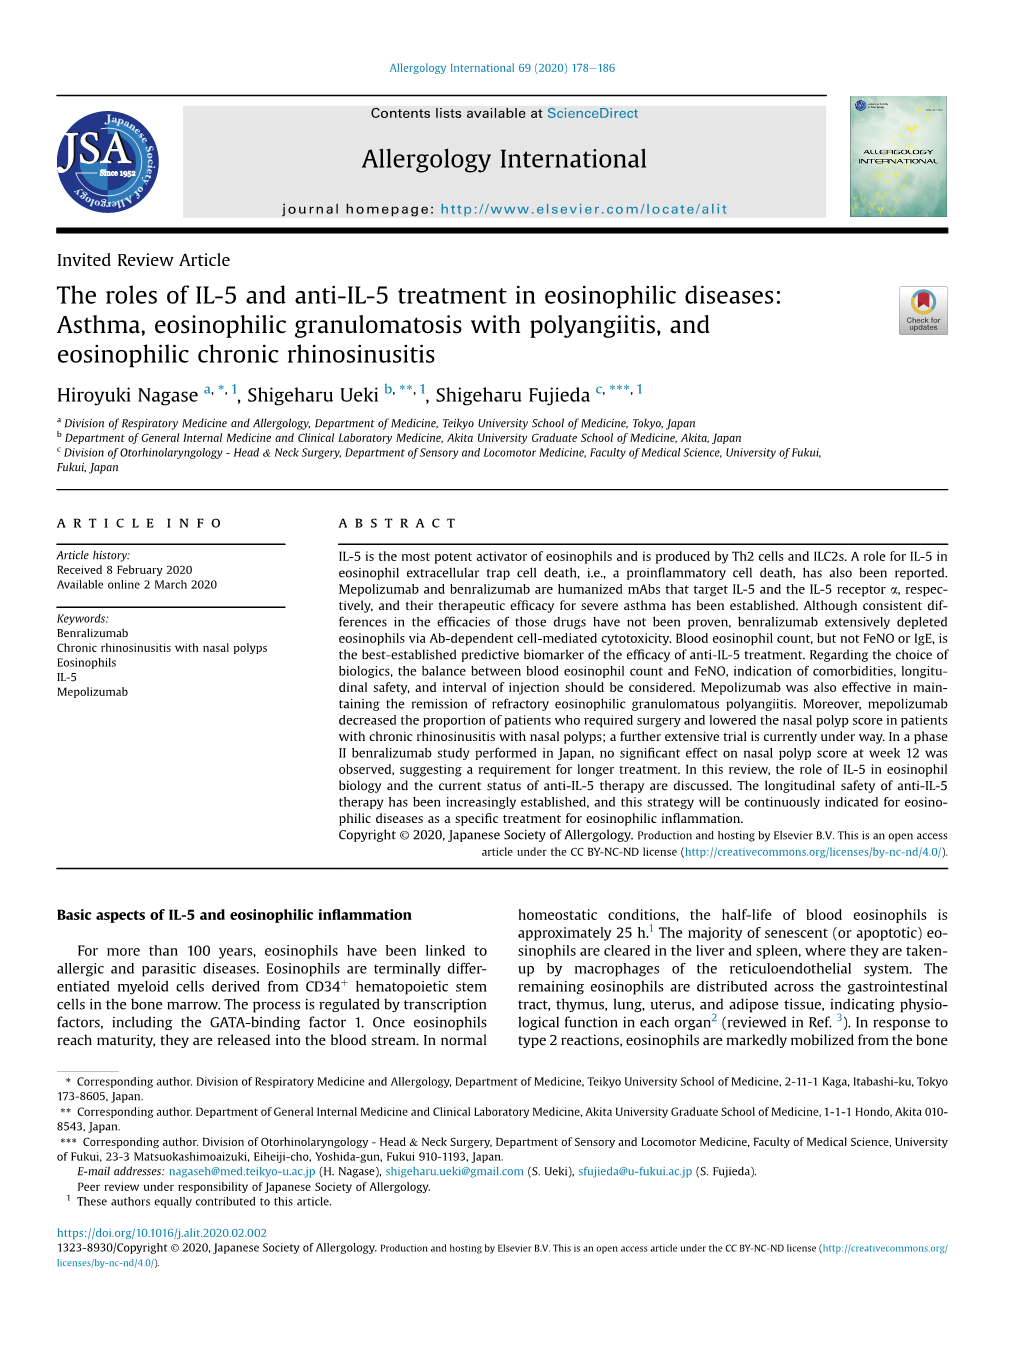 Asthma, Eosinophilic Granulomatosis with Polyangiitis, and Eosinophilic Chronic Rhinosinusitis